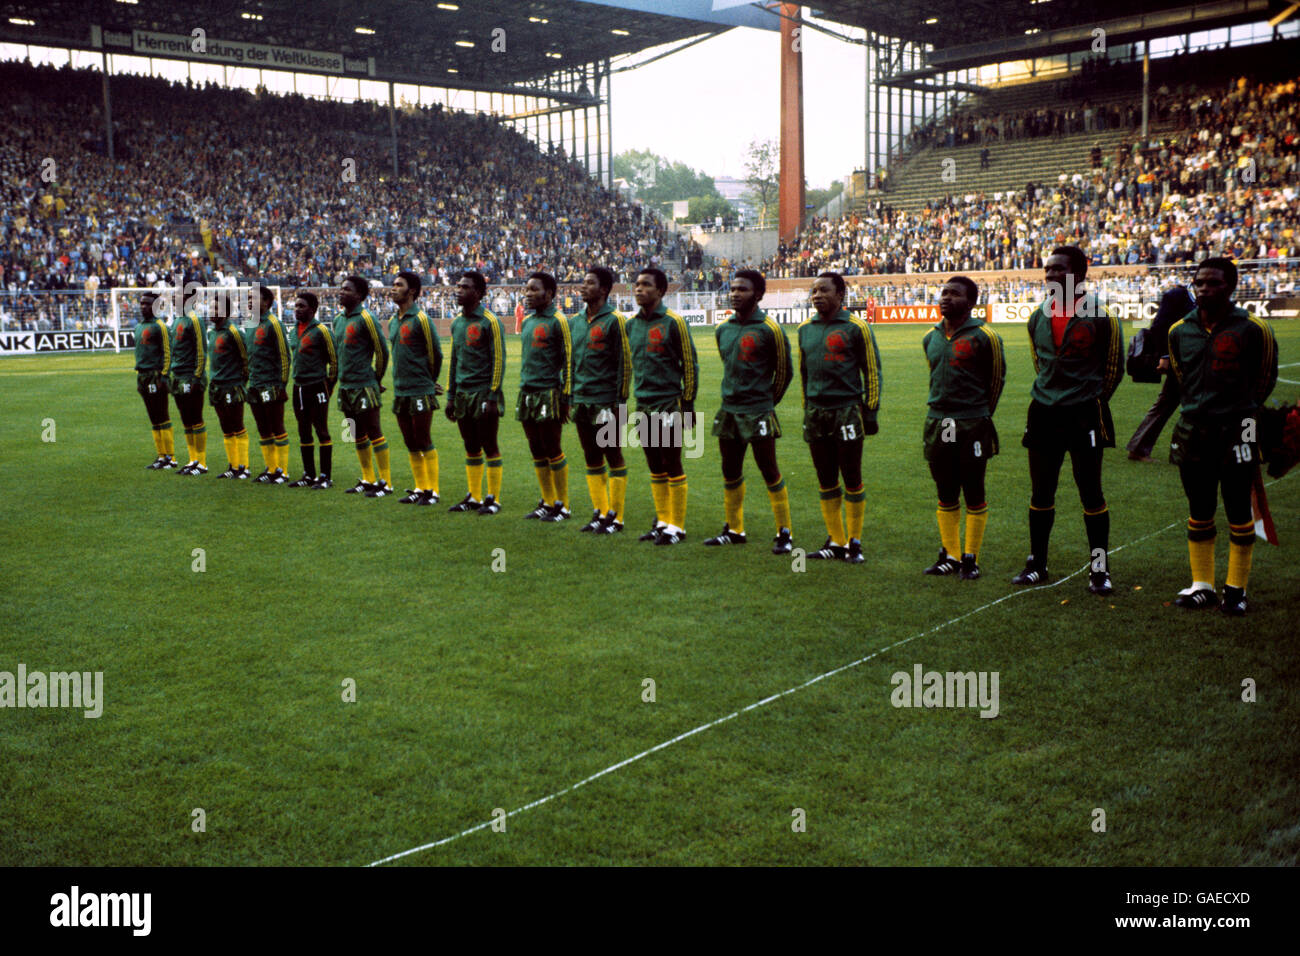 Soccer - FIFA World Cup West Germany 1974 - Group 2 - Zaire v Scotland - Westfalenstadion, Dortmund. The Zaire team on the field. Stock Photo